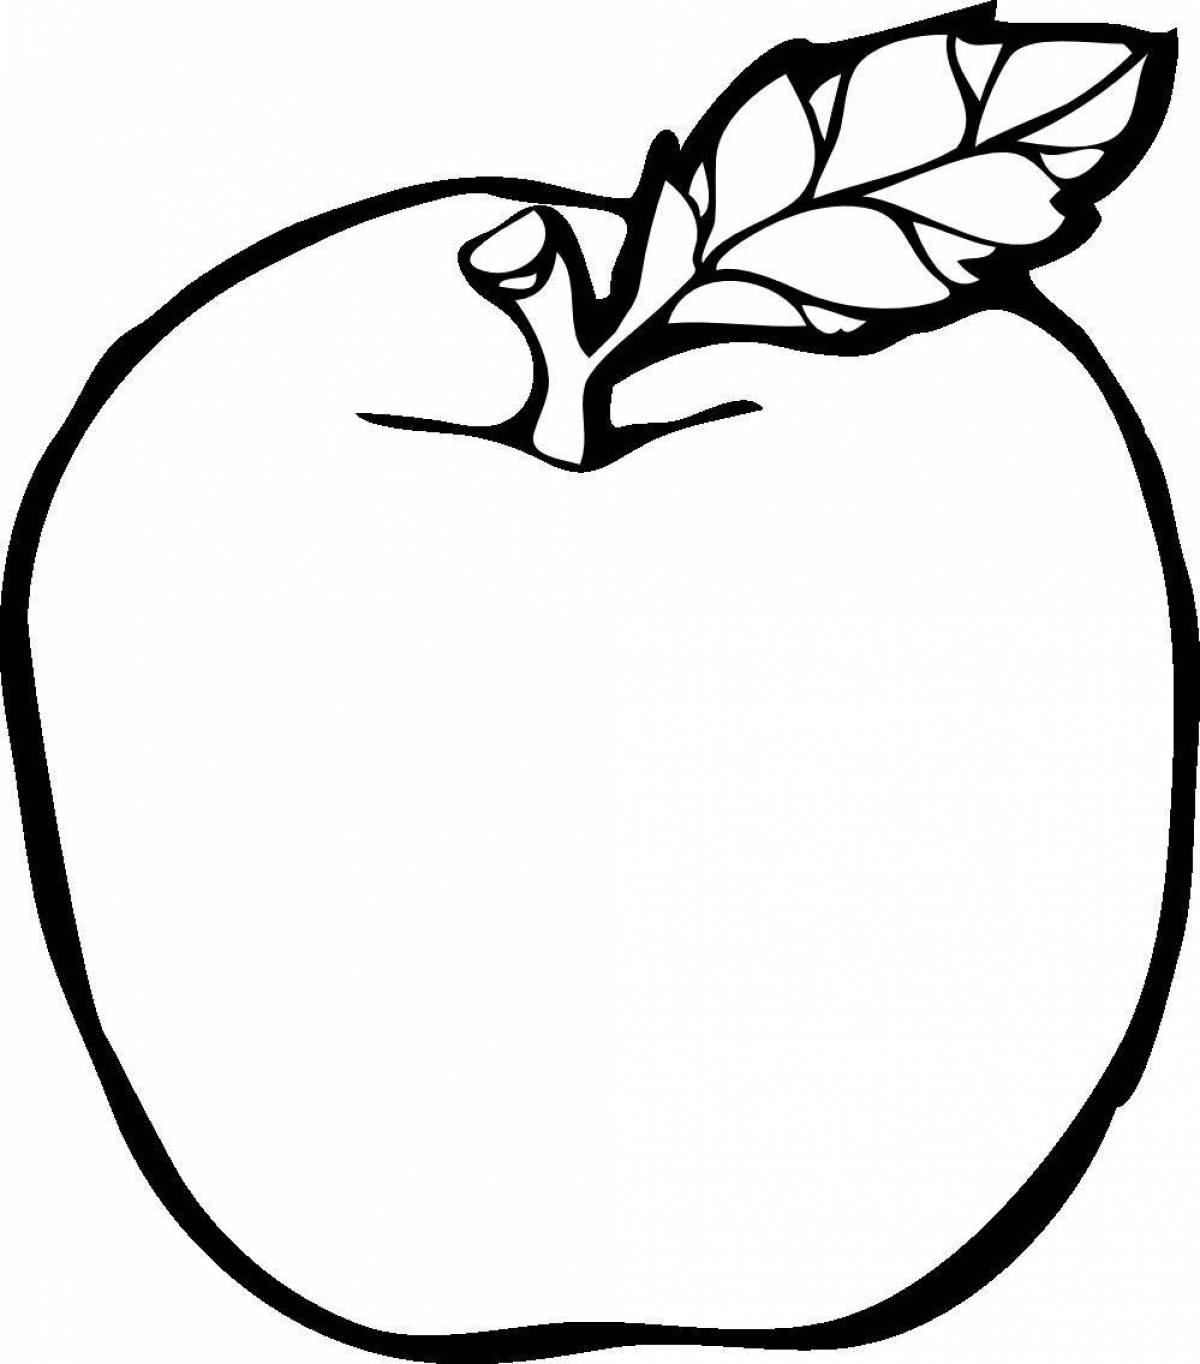 Креативная раскраска apple для детей 3-4 лет